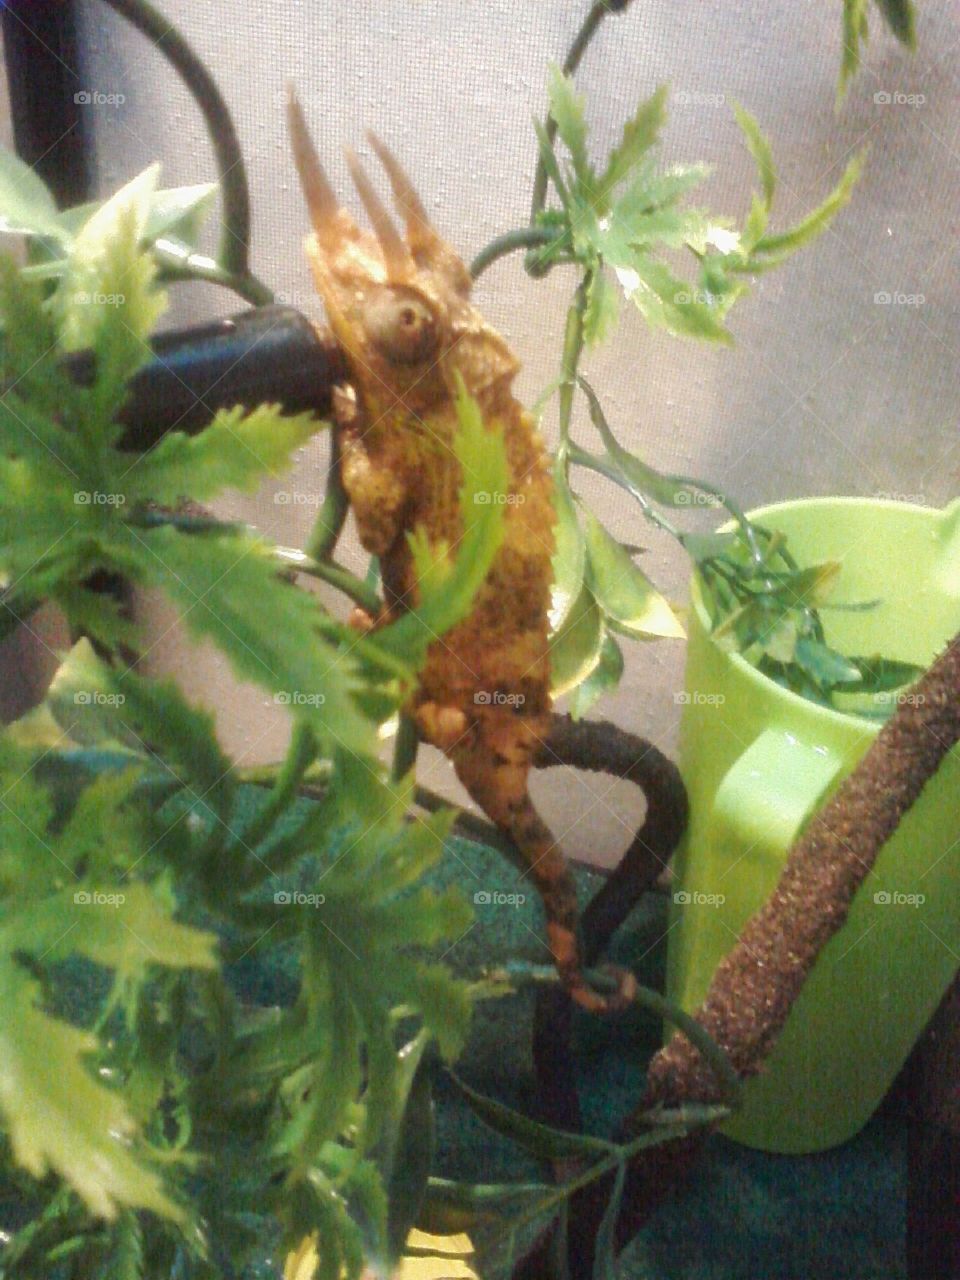 Drake, Jackson chameleon in his habitat, climbing